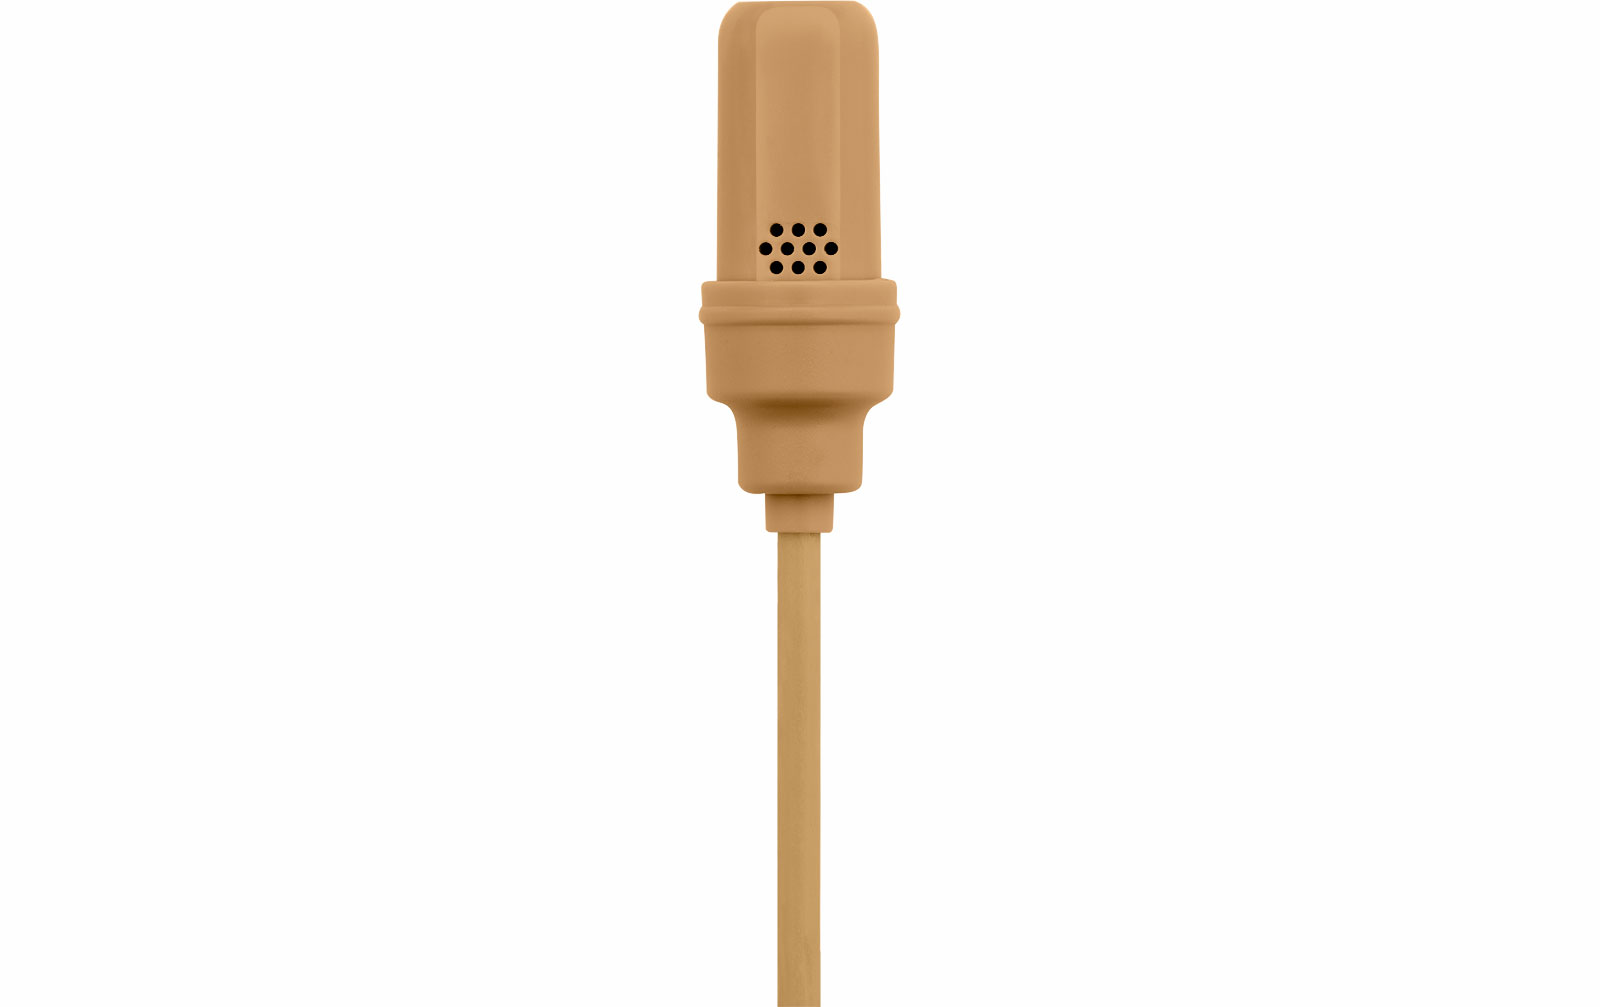 Shure UL4T/C-LM3-A UL4 Lavaliermikrofon mit Nierencharakteristik, LEMO3-Stecker, beige, inkl. Zubehör von Shure